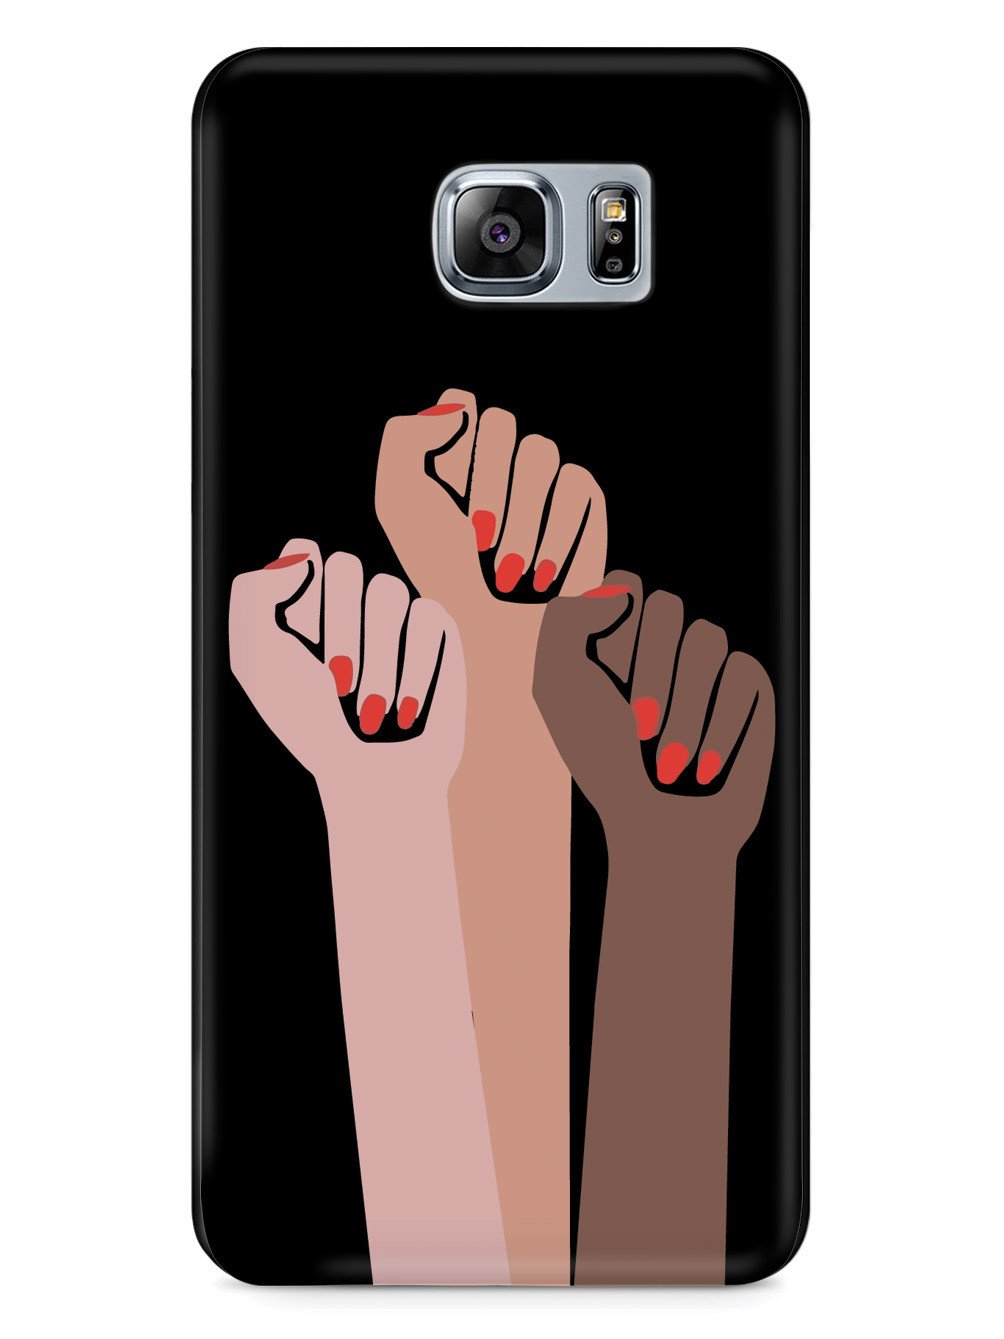 Women Unite! Women's March Solidarity Design - Black Case - pipercleo.com